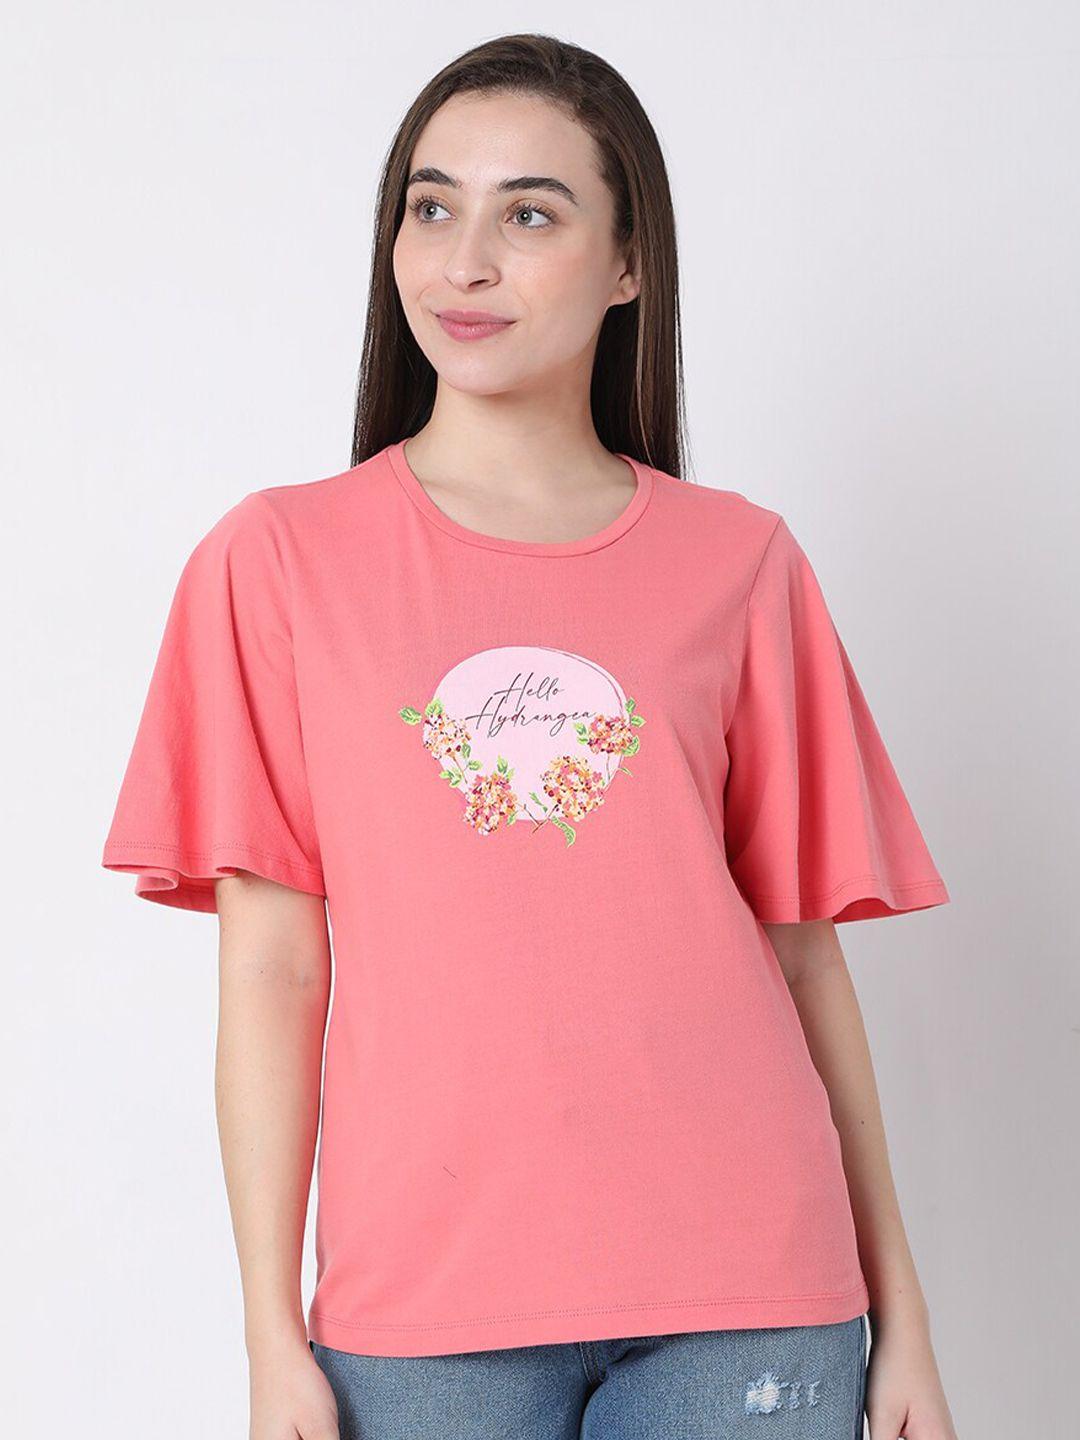 vero moda women pink printed t-shirt